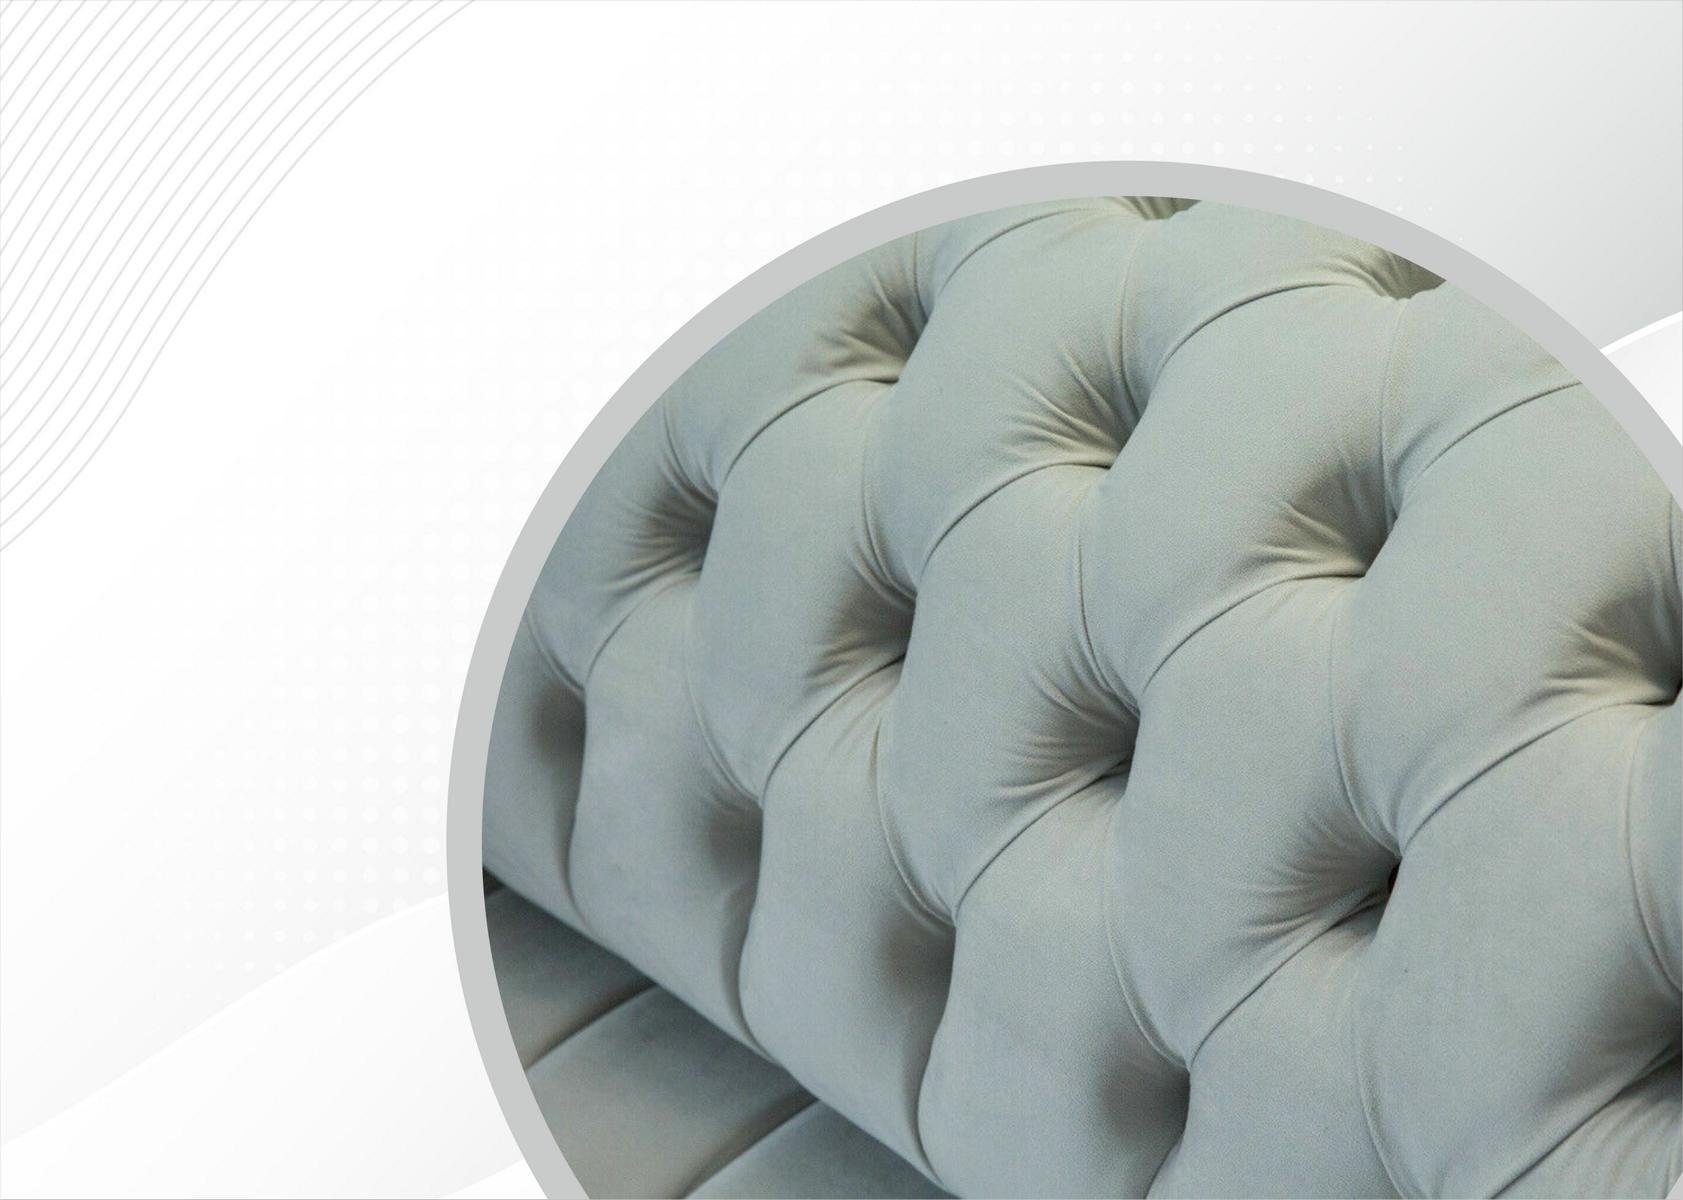 cm Design Couch JVmoebel Sitzer Sofa Chesterfield Chesterfield-Sofa, 185 2